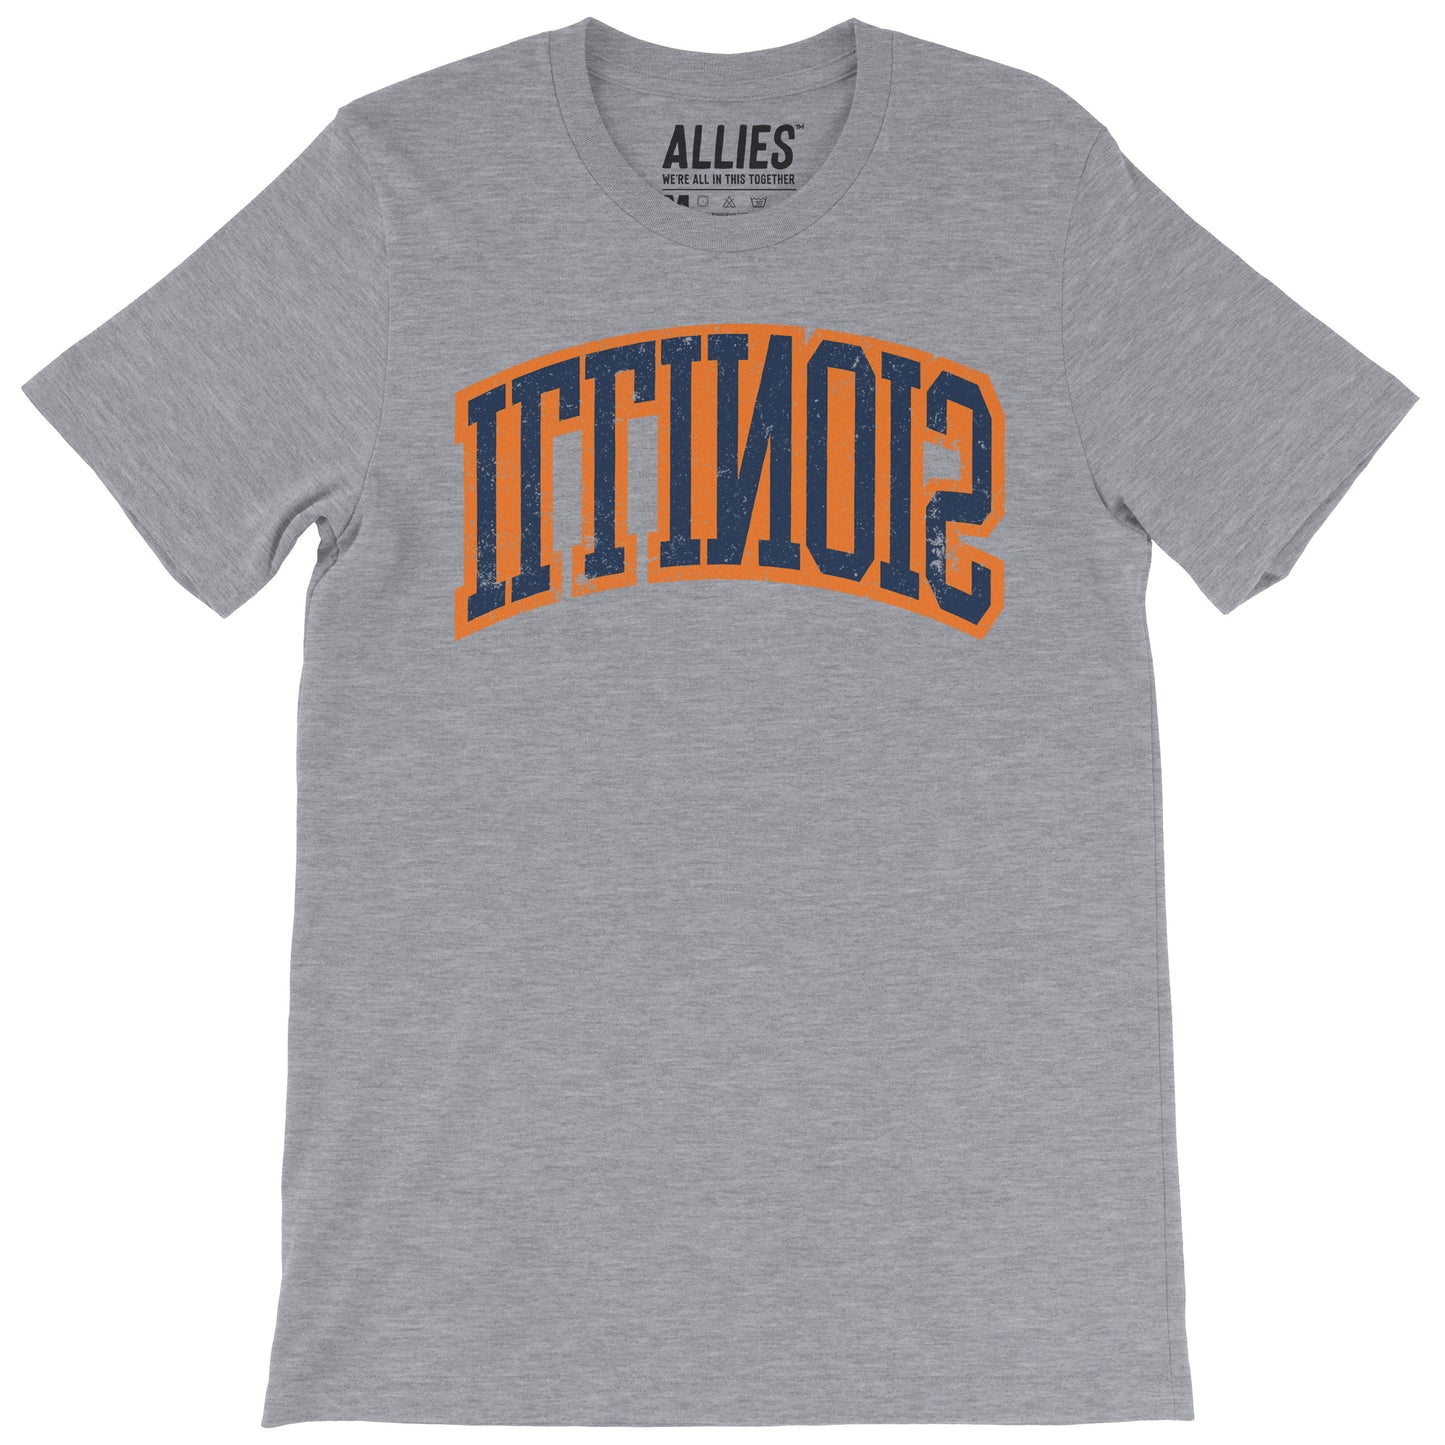 Illinois Flipped T-shirt